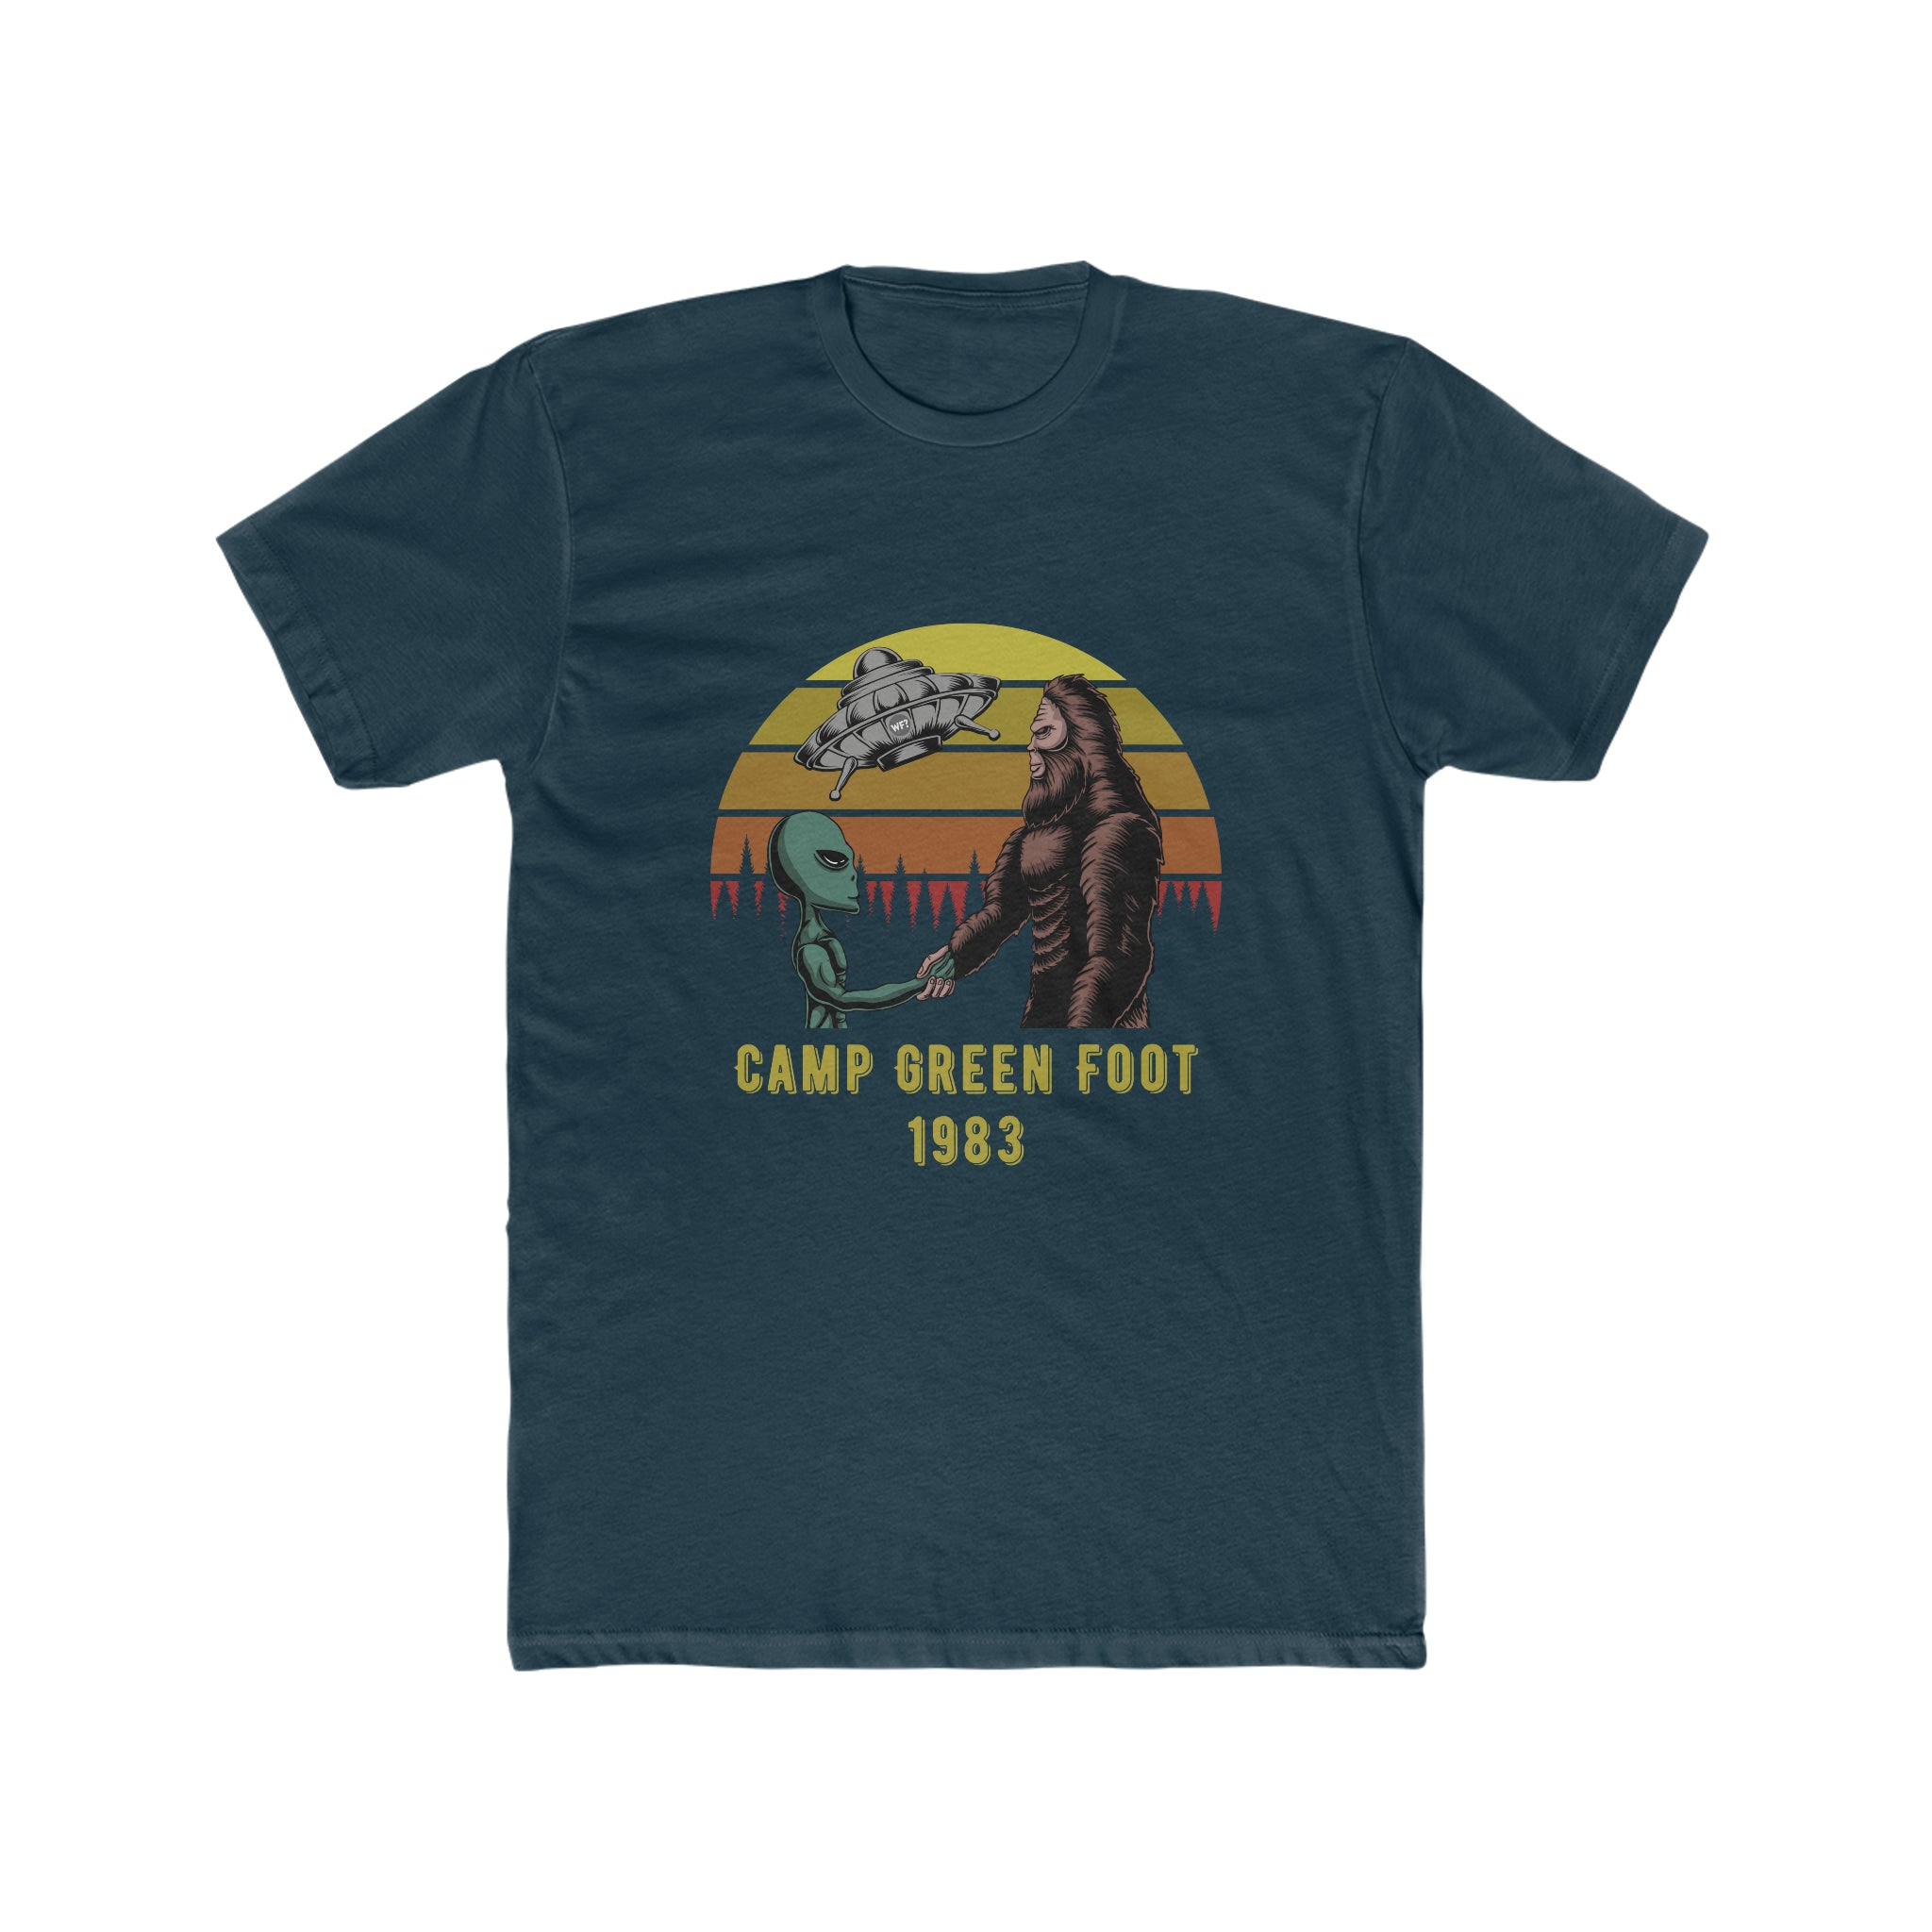 Buy solid-midnight-navy Camp Green Foot 1983 Unisex T-Shirt